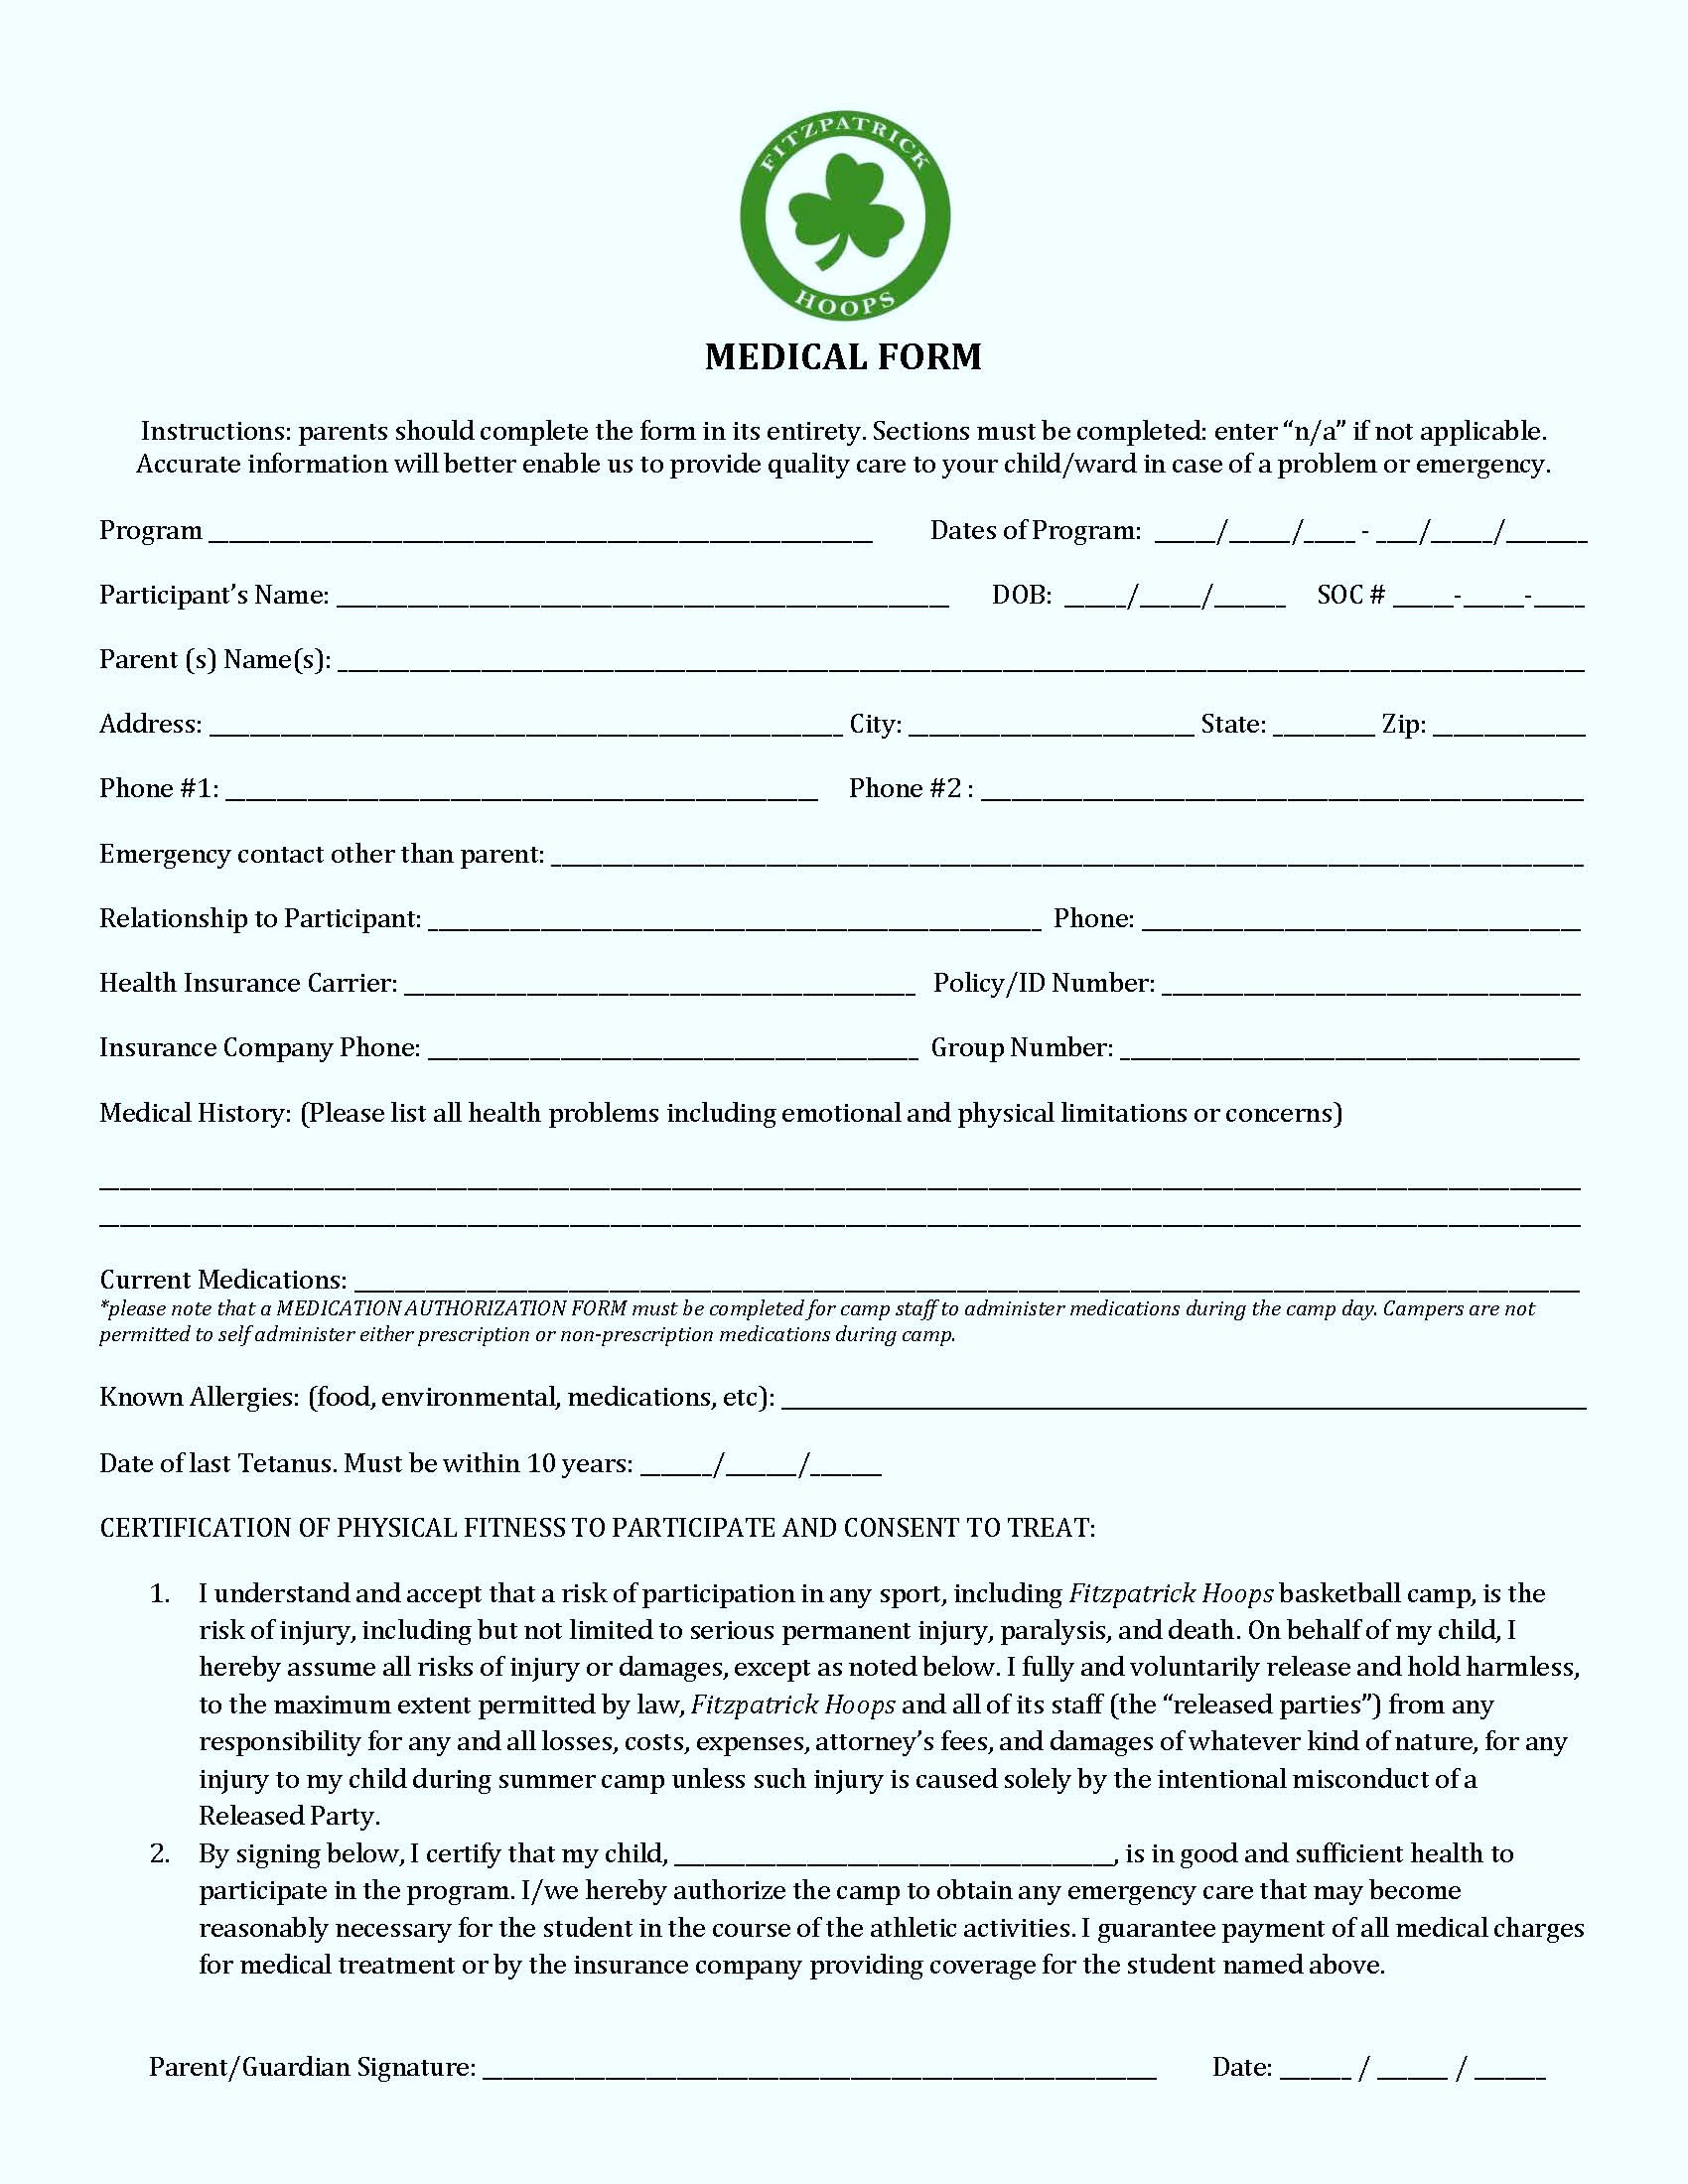 Student Medical Form Florida Free Download